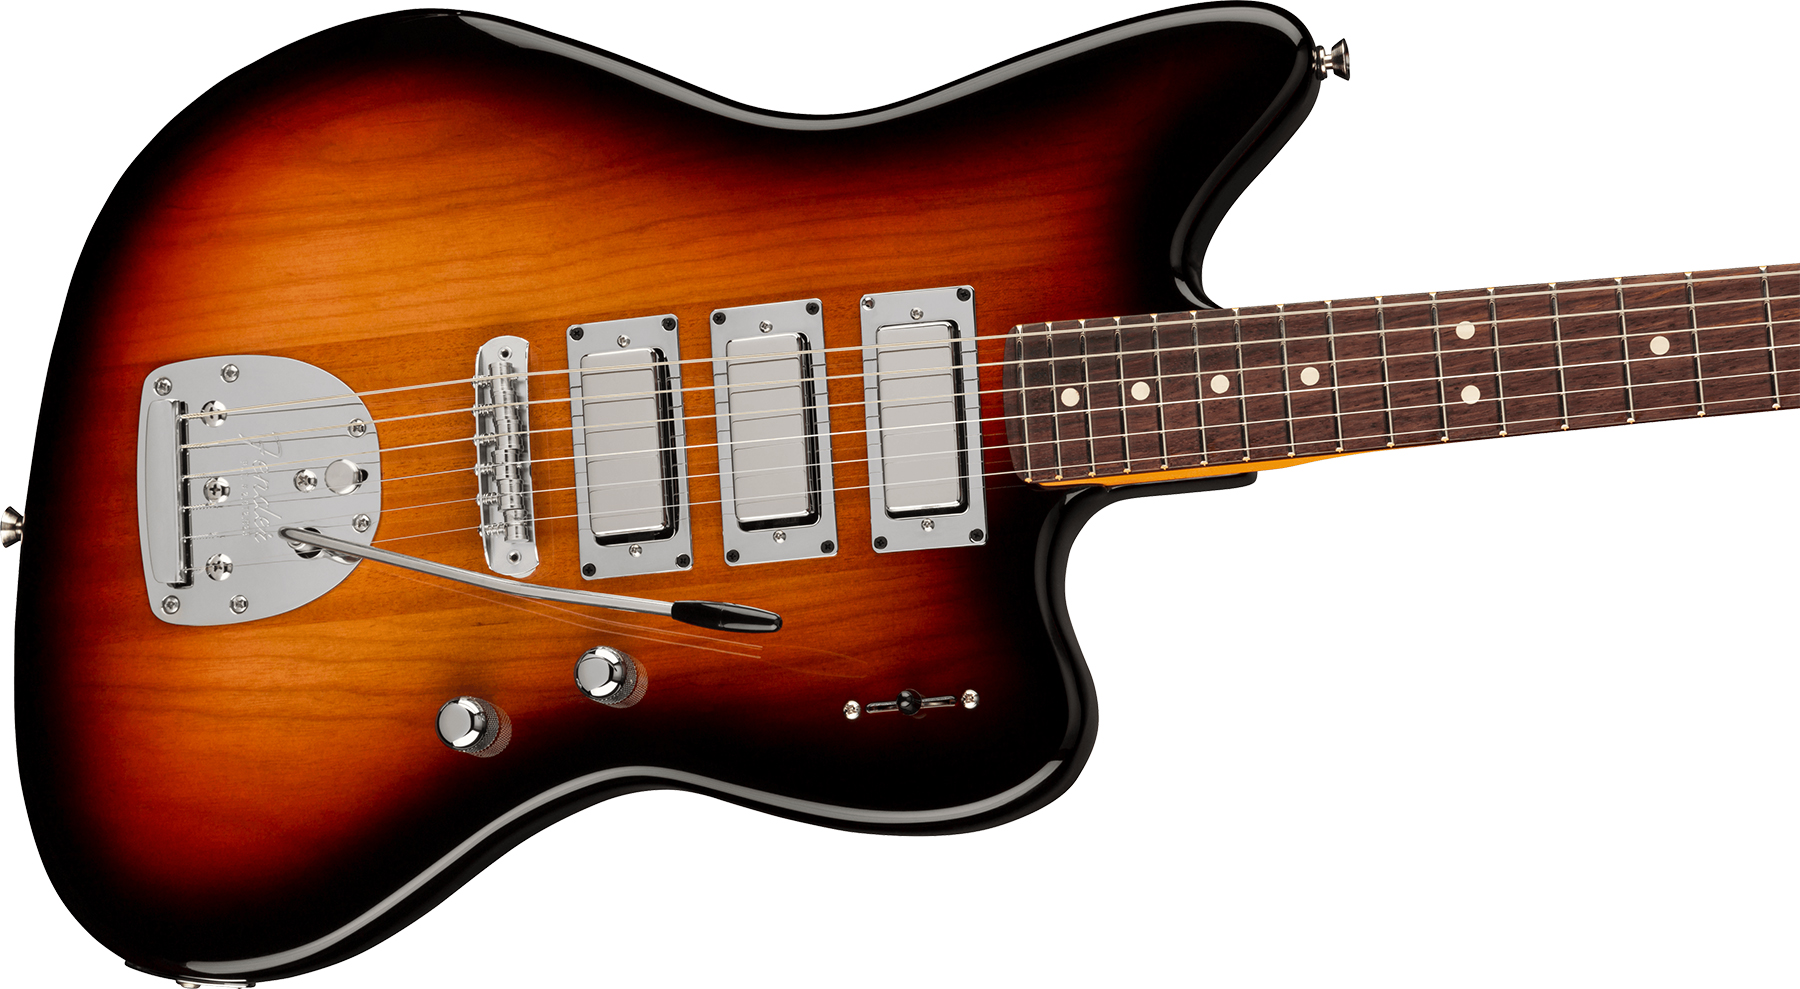 Fender Jazzmaster Spark-o-matic Volume Ii Parallel Universe Hhh Trem Rw - 3-color Sunburst - Retro rock electric guitar - Variation 2